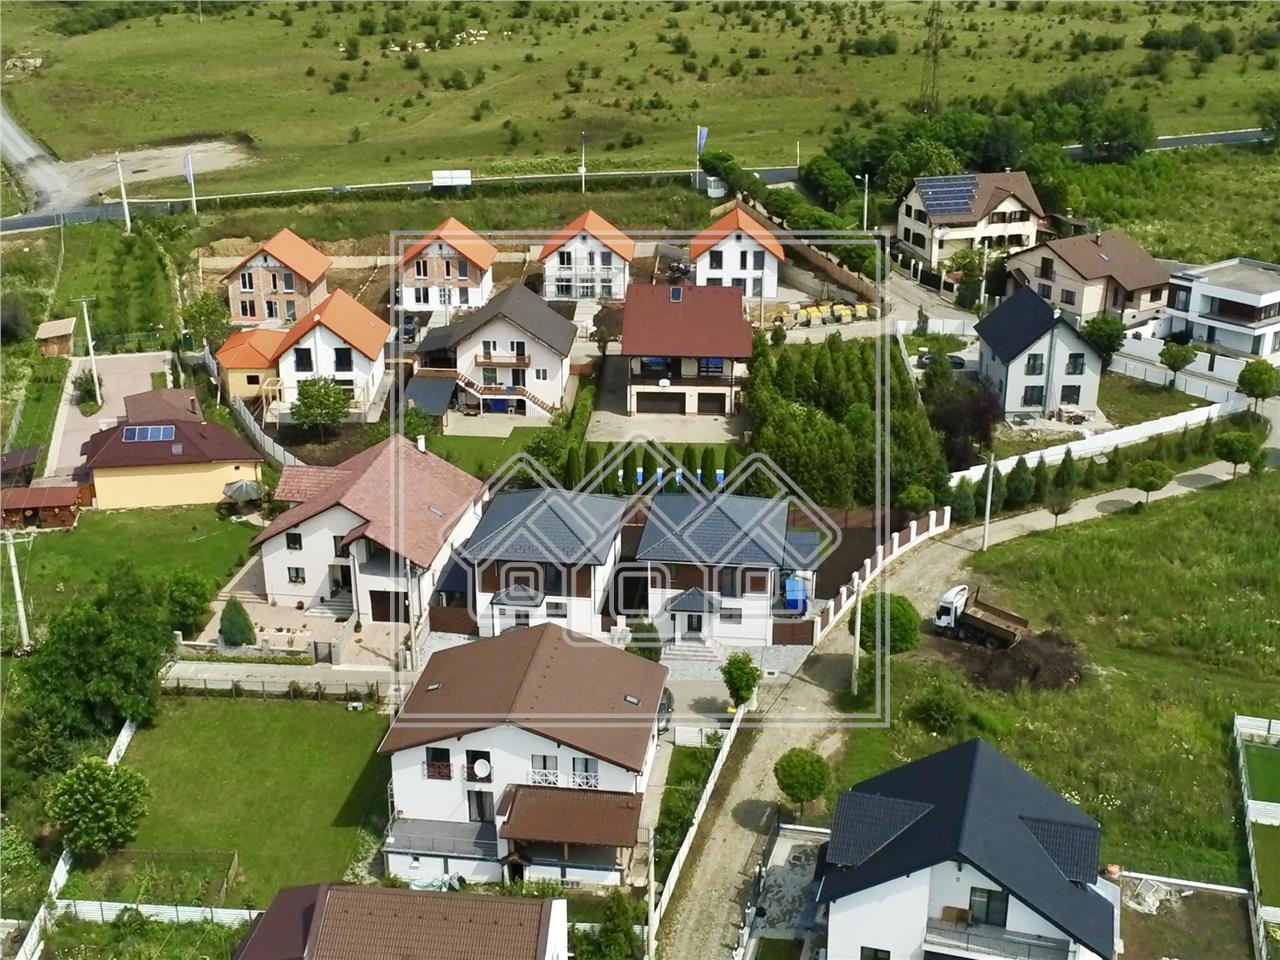 Bavaria Residential Park - Sibiu Real Estate